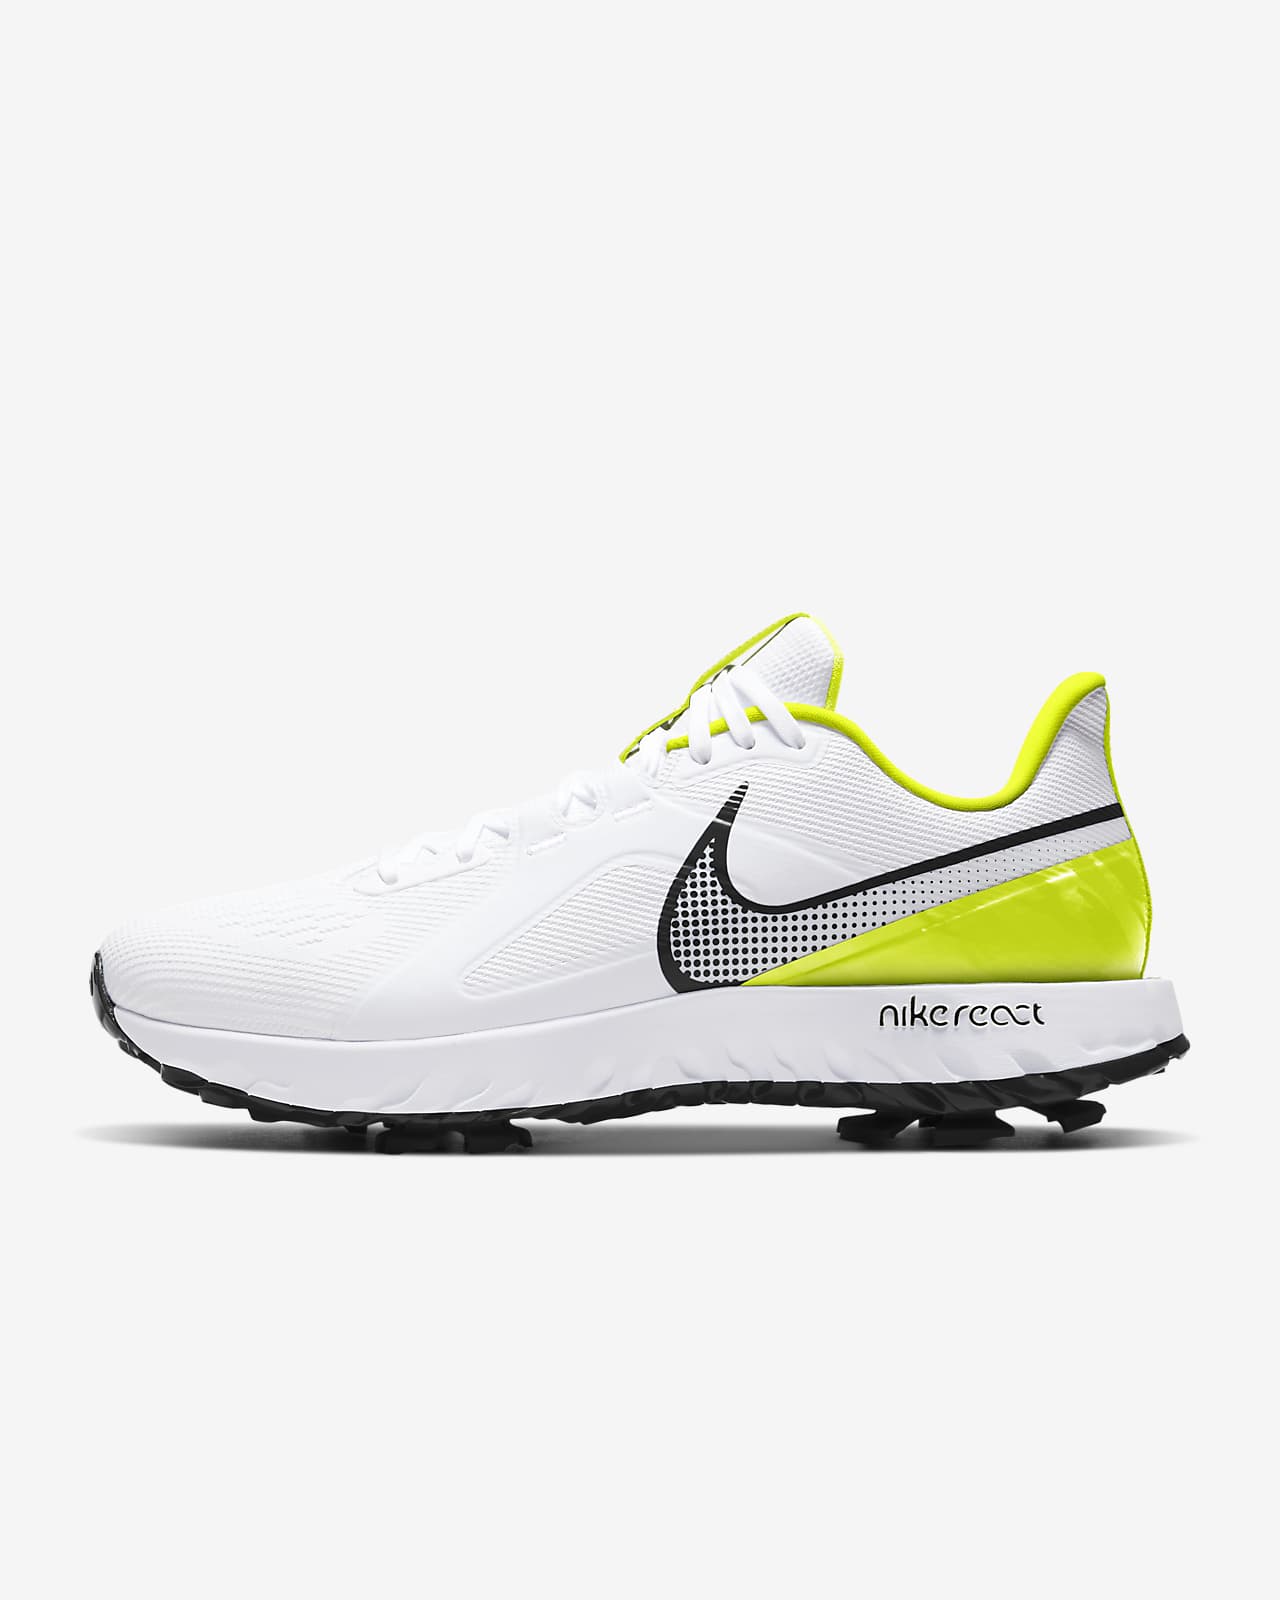 Nike React Infinity Pro Golf Shoe. Nike AT